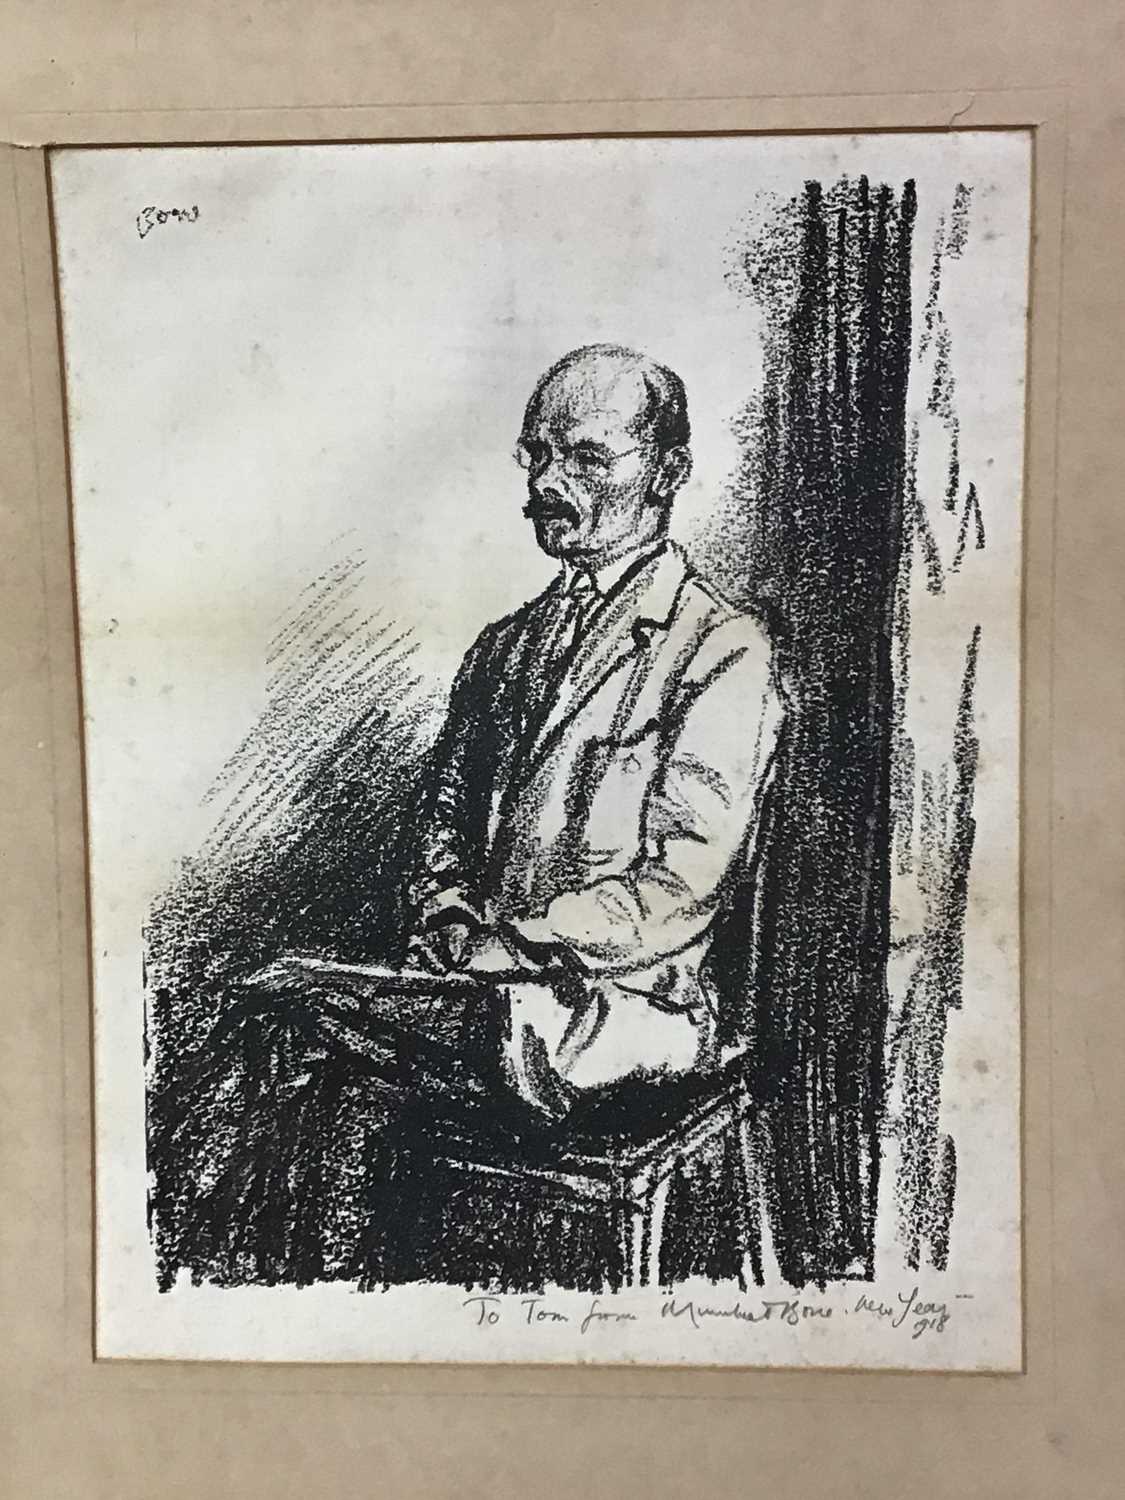 SIR MUIRHEAD BONE (SCOTTISH, 1876 - 1953), PORTRAIT,